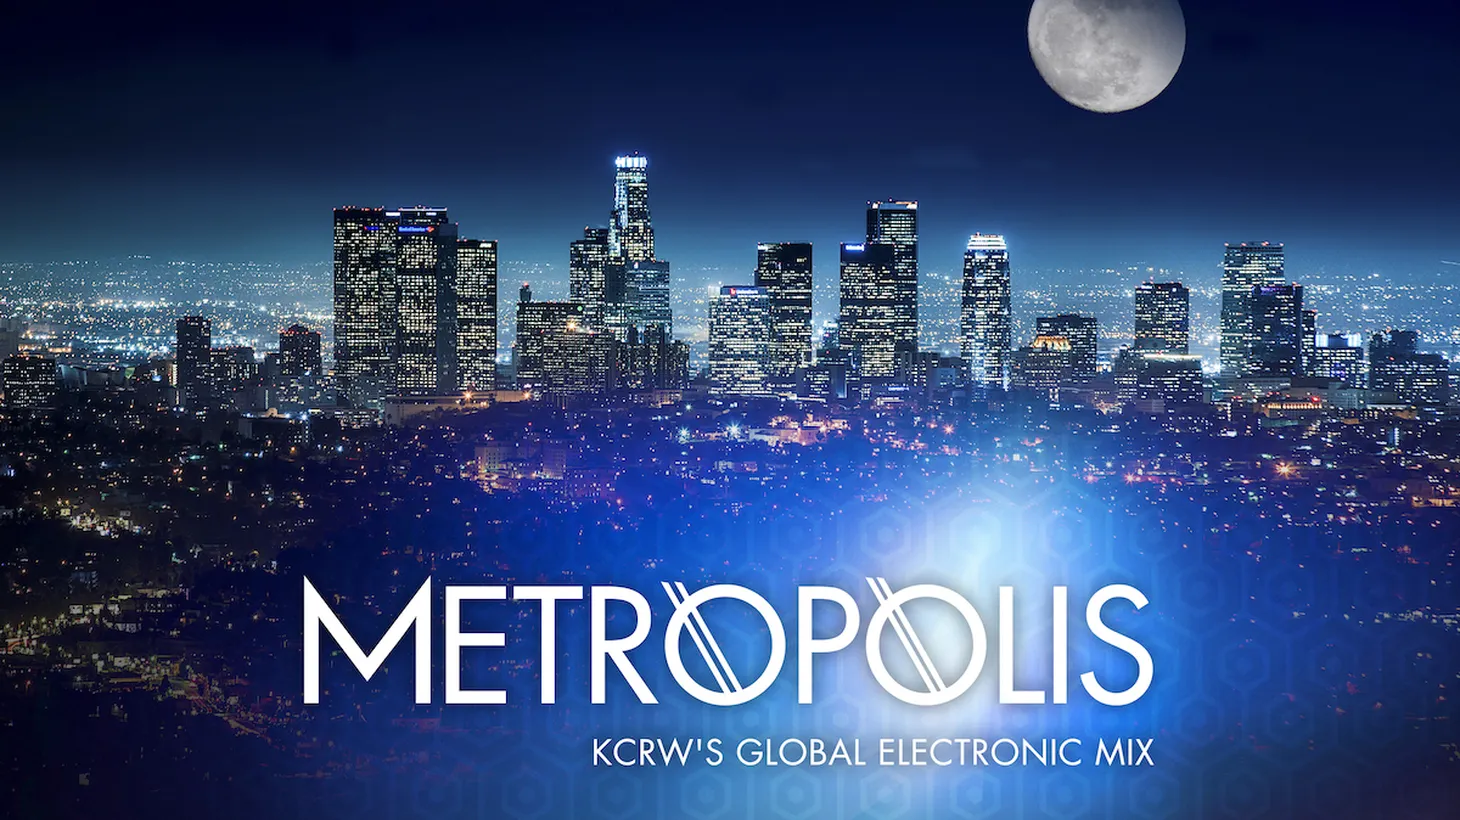 Metropolis playlist, April 16, 2022.